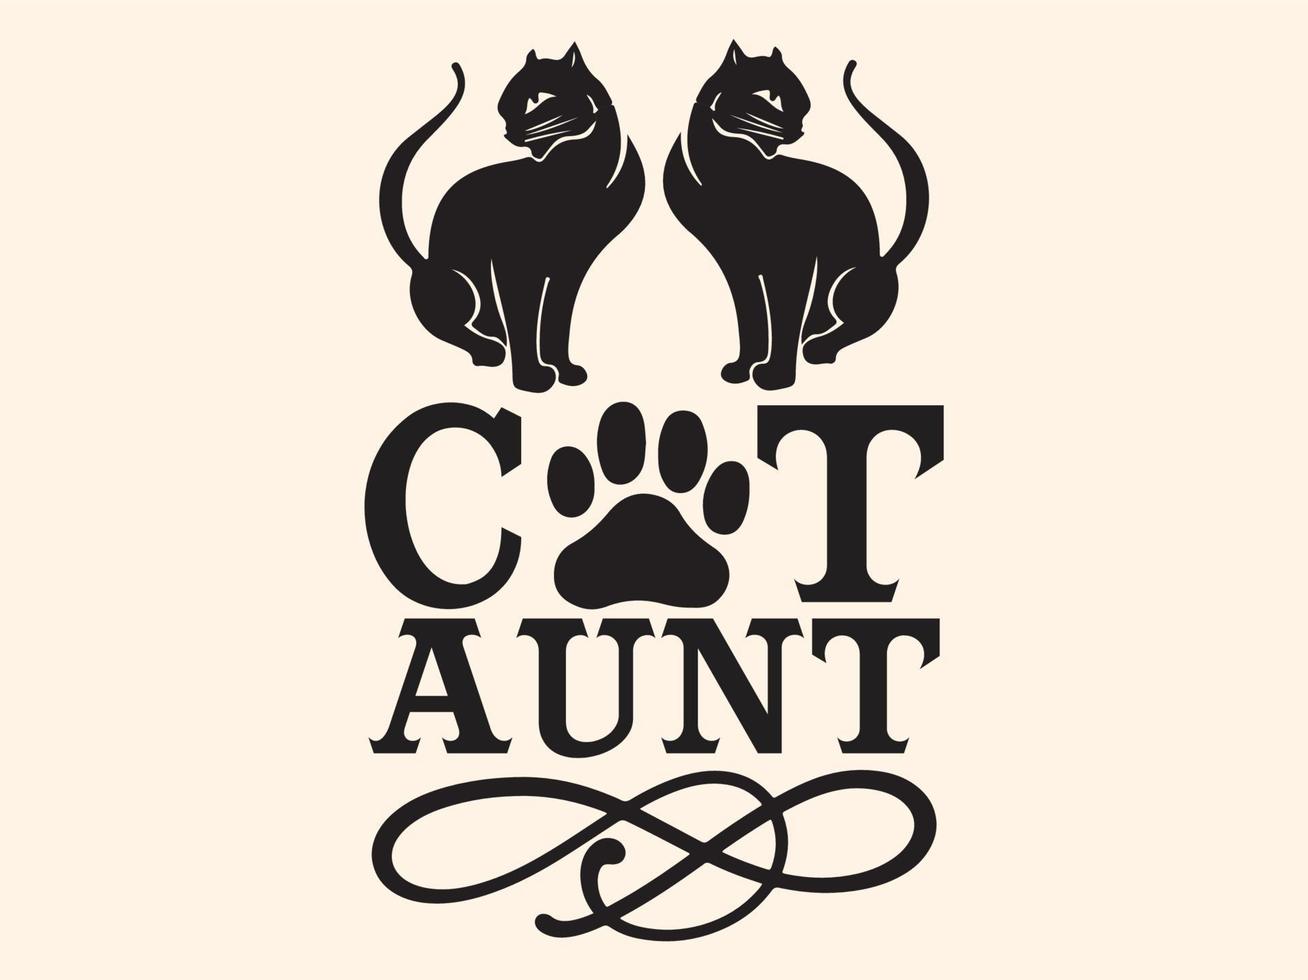 Cat t-shirt design vector file